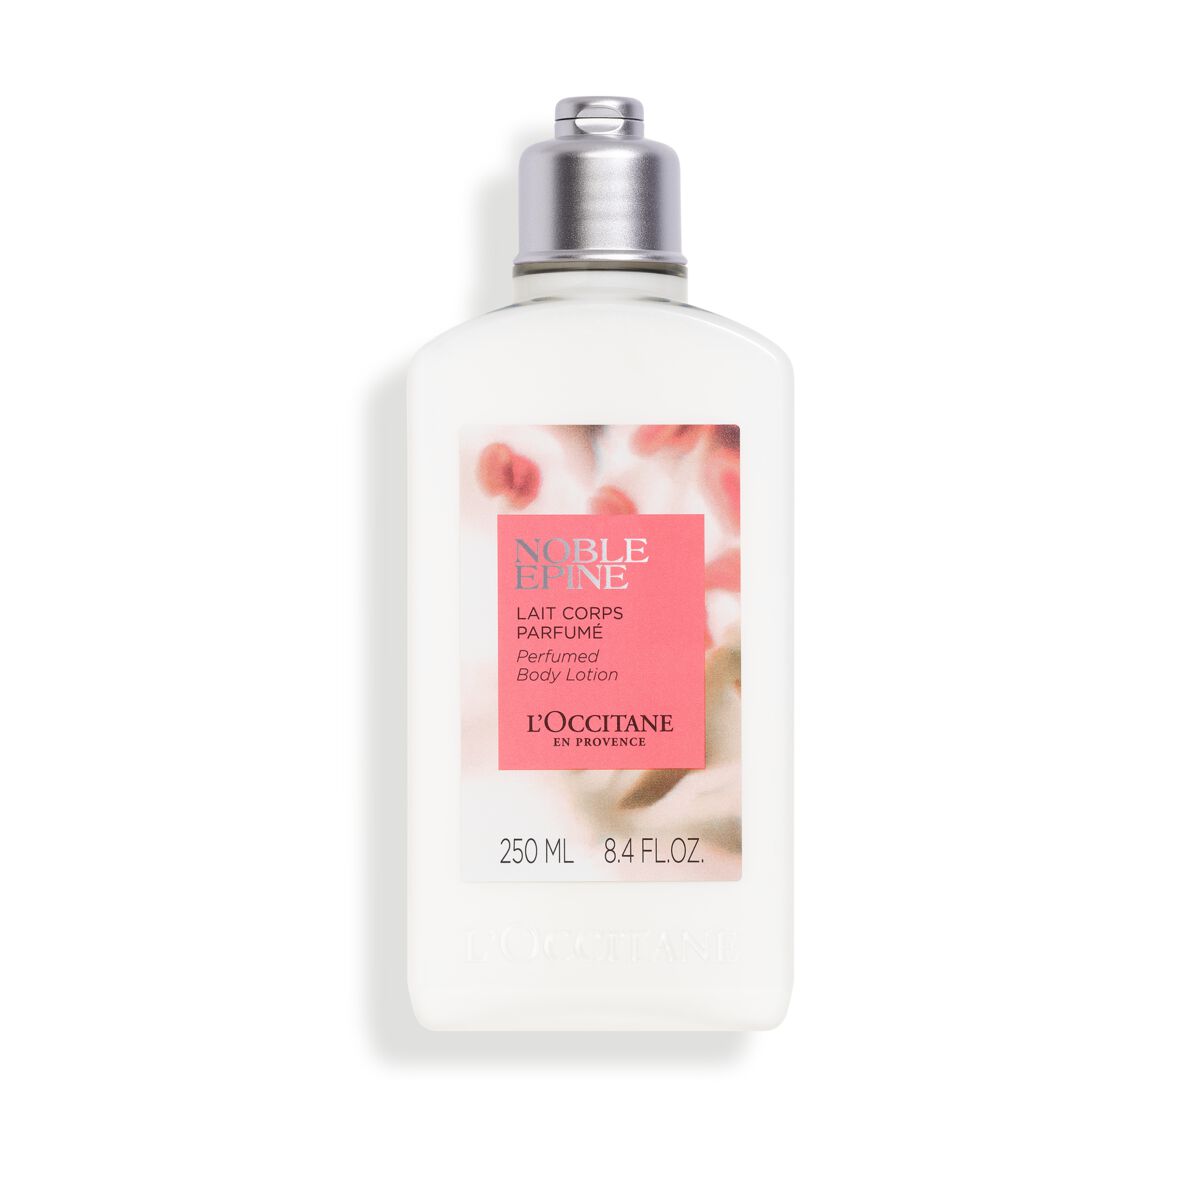 L'occitane - Noble Epine Perfumed Body Lotion 8.4 Fl oz In White